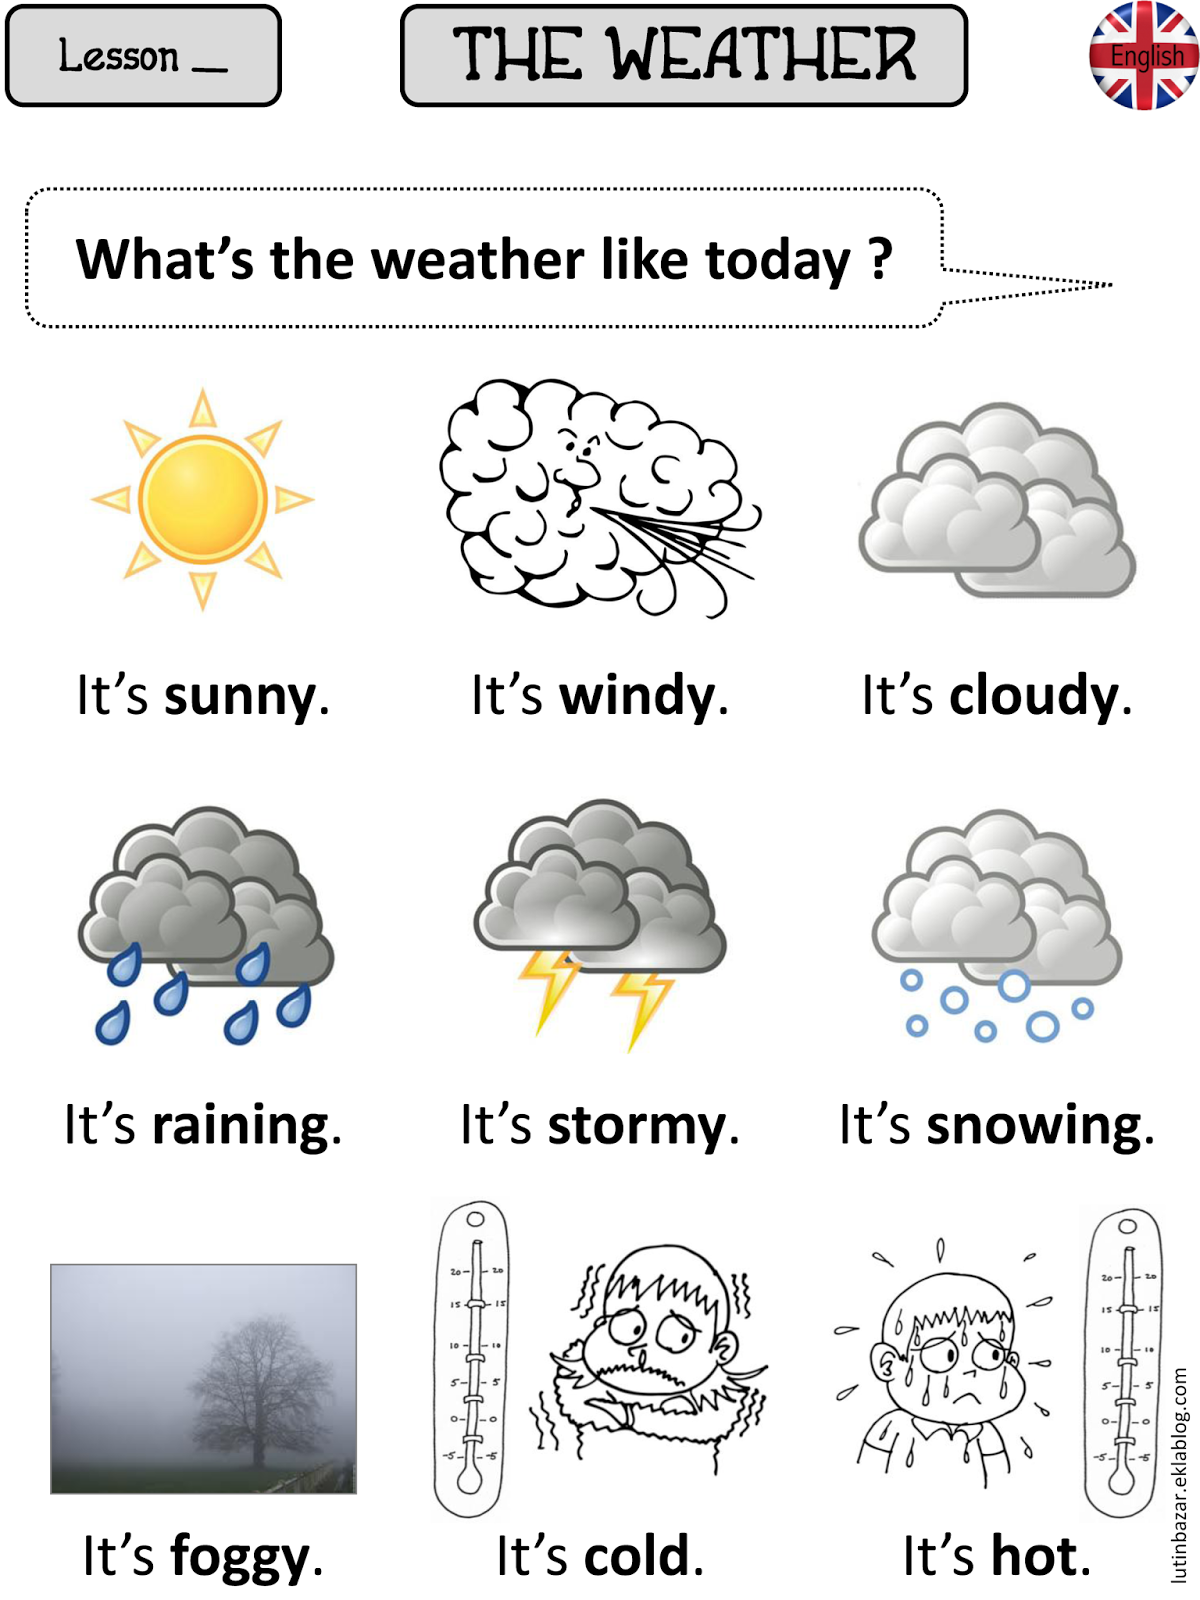 Https weather com wx today. Weather задания. Weather для детей на английском. Погода на английском. Weather английский задания.